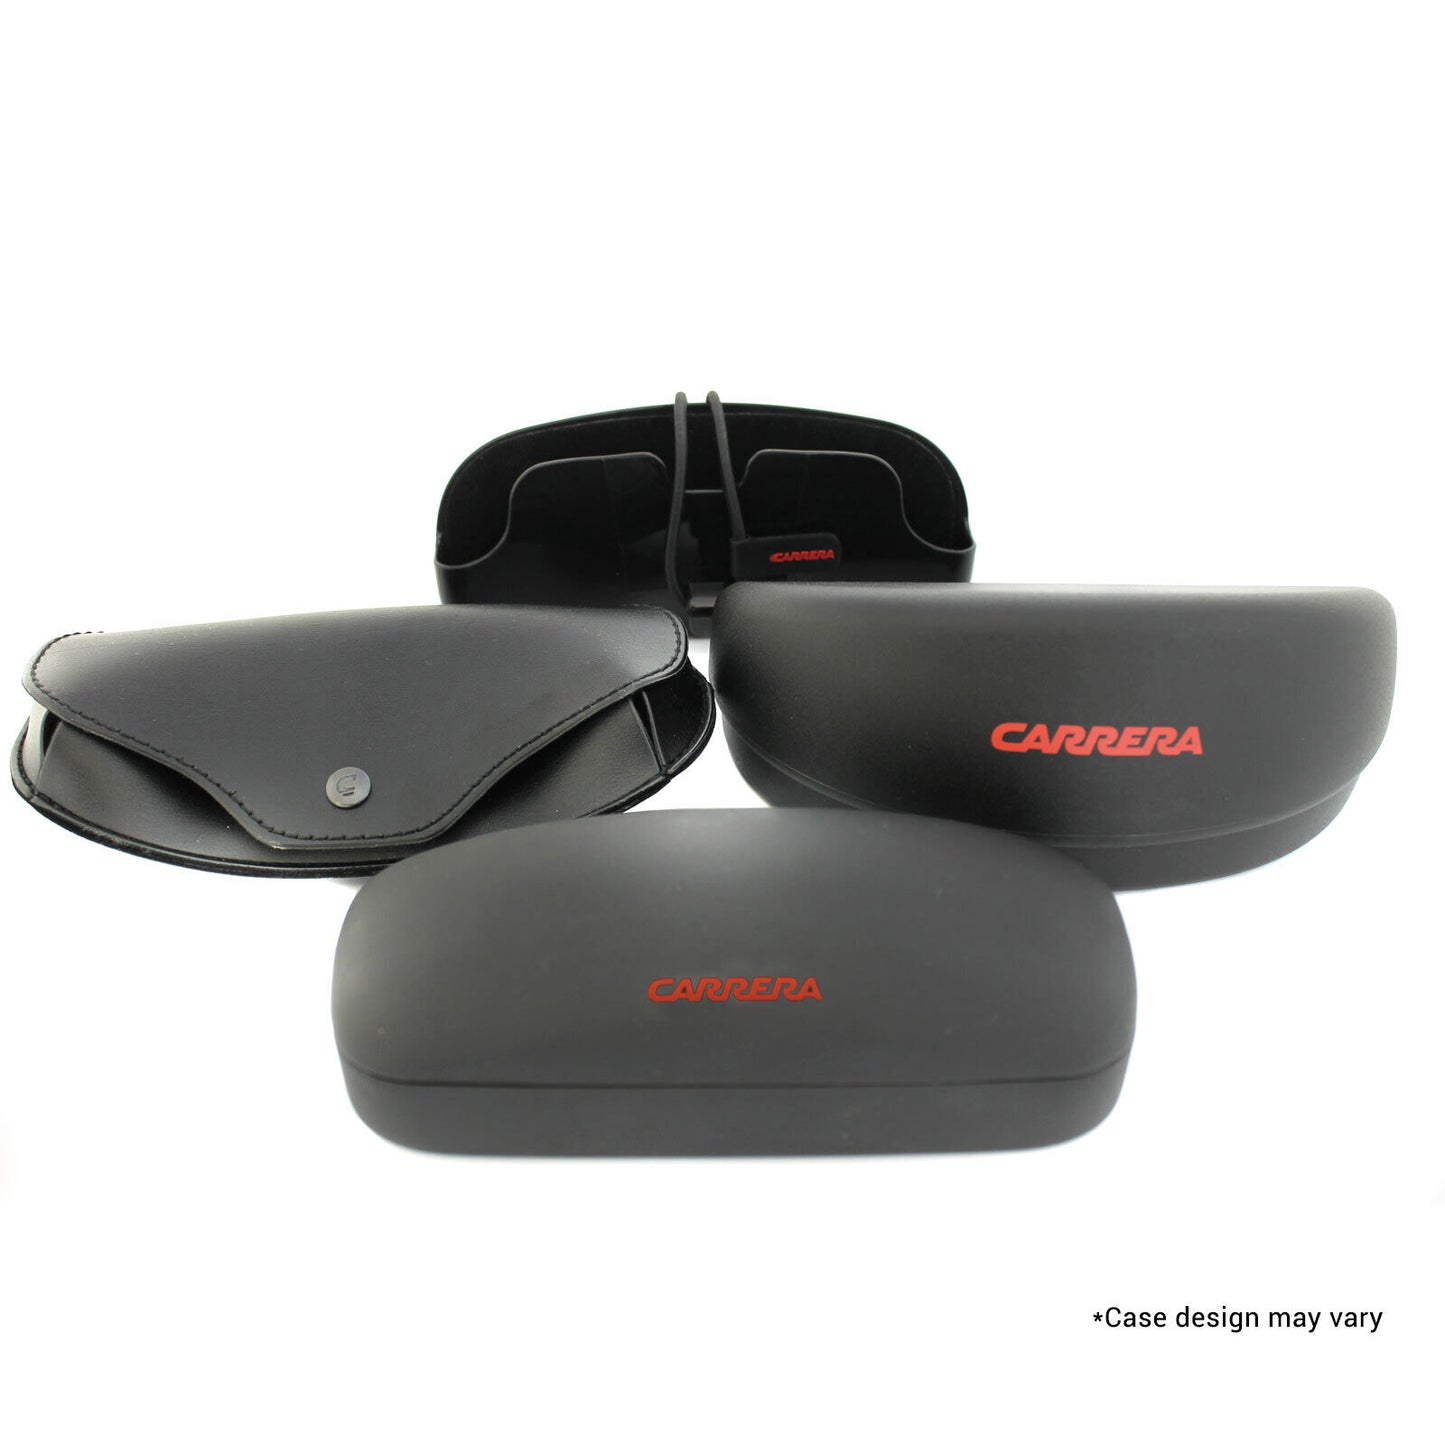 Carrera CARRERA 8870-0R80 00 55mm New Eyeglasses